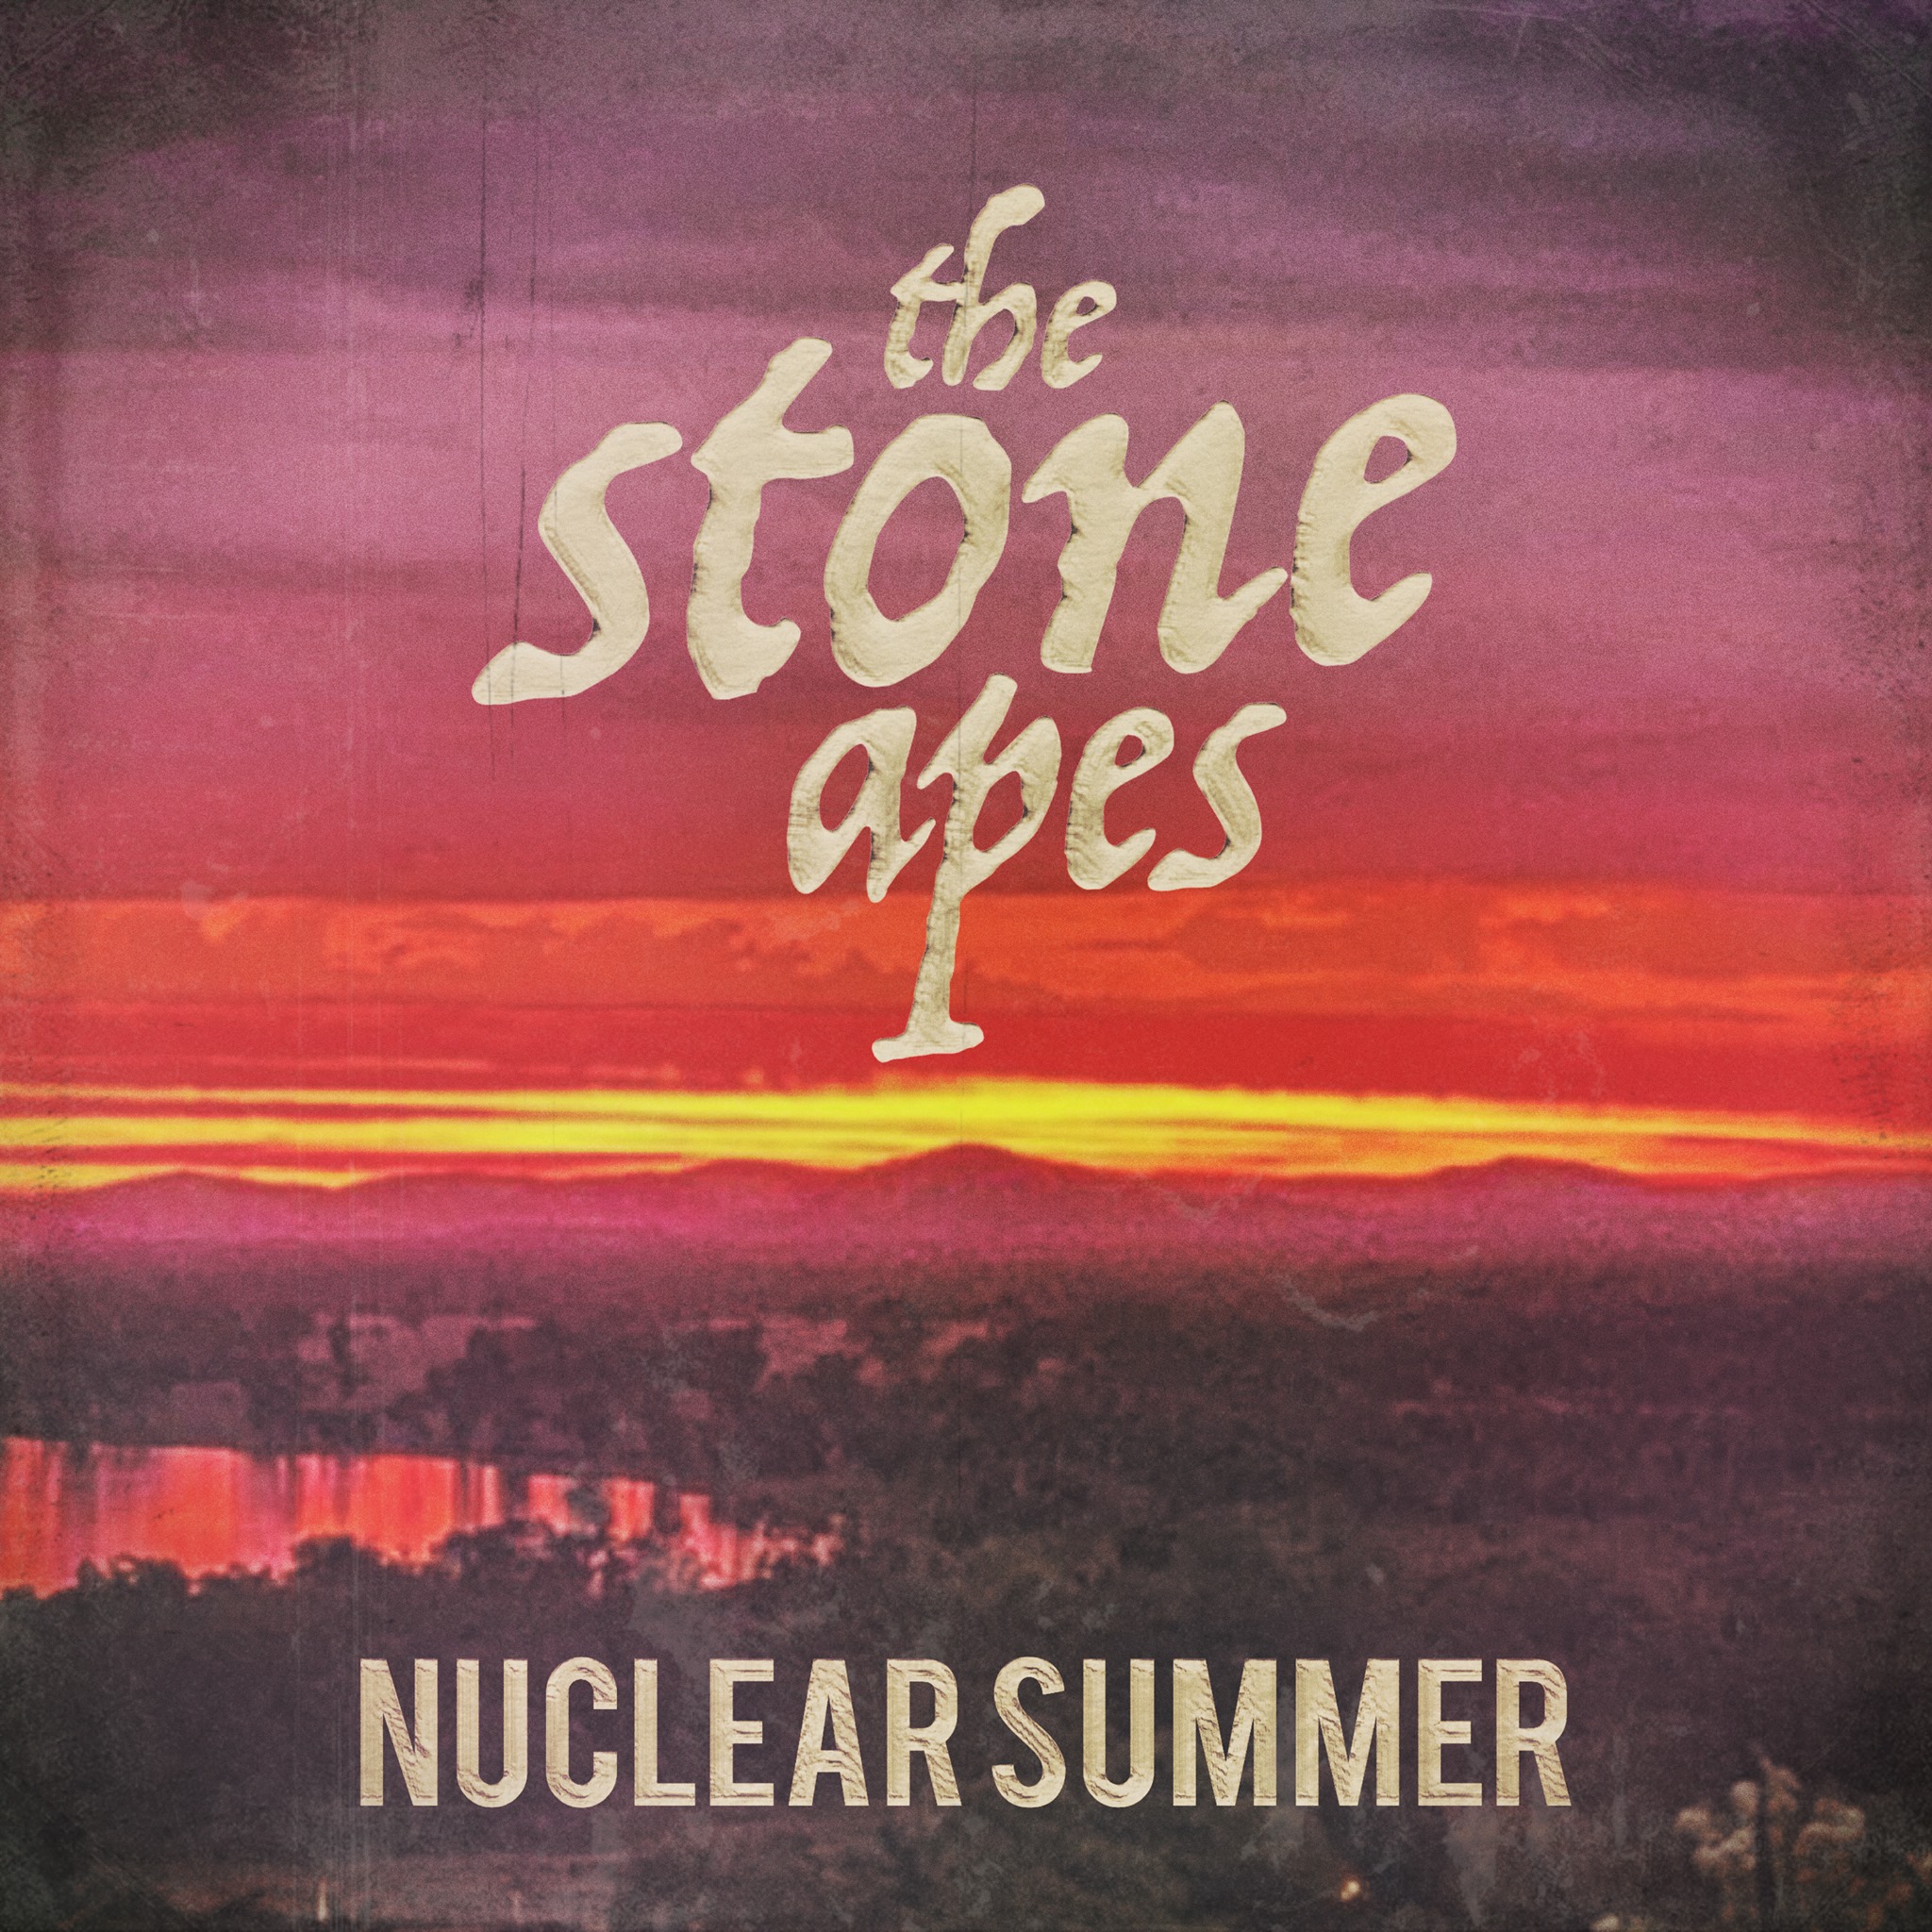 nuclear summer - the stone apes - australia - indie - indie music - indie pop - indie rock - indie folk - new music - music blog - wolf in a suit - wolfinasuit - wolf in a suit blog - wolf in a suit music blog